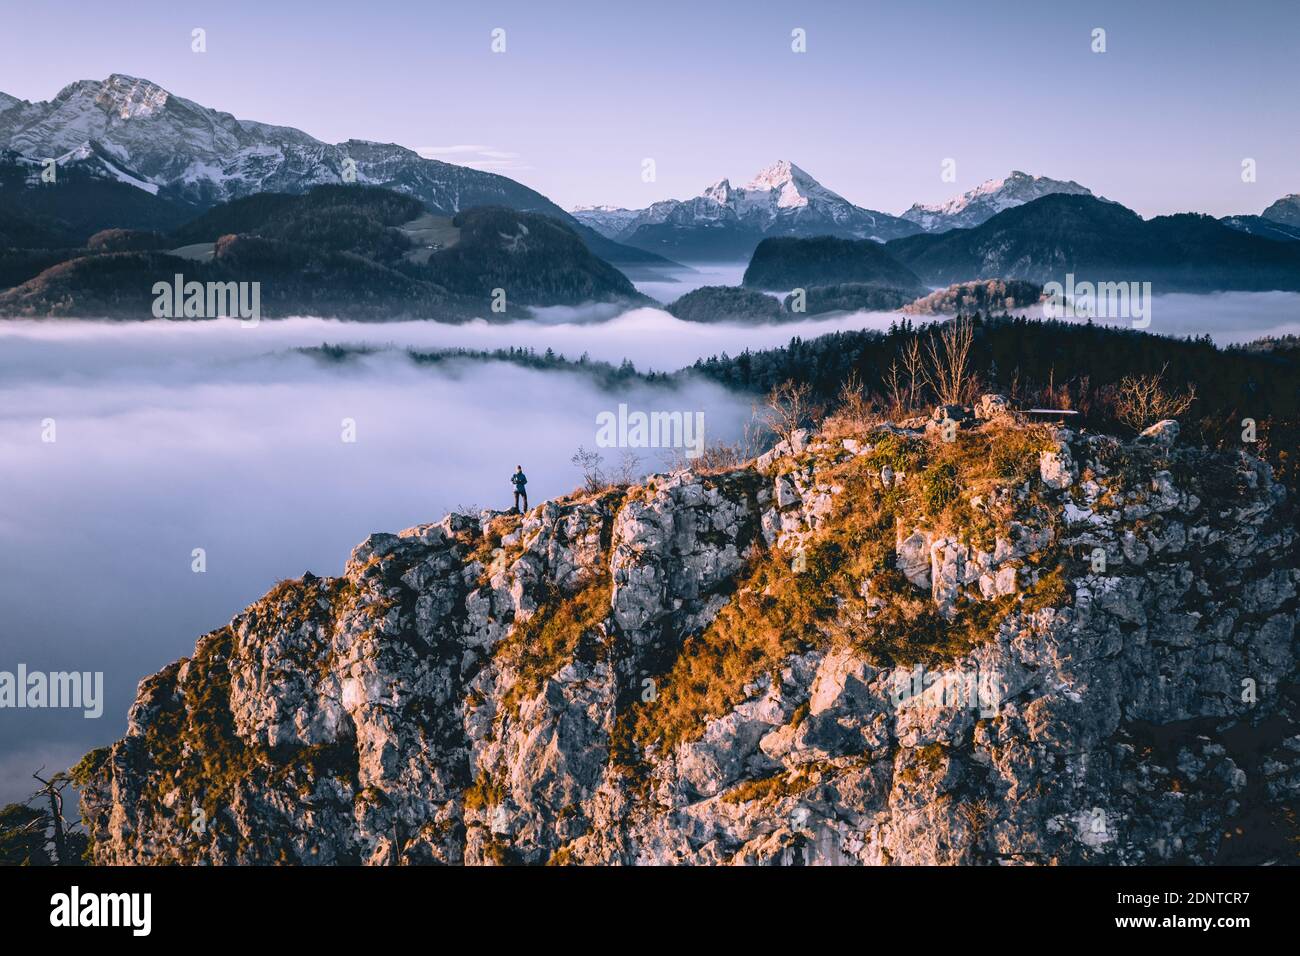 Man standing on mountain ridge rising above the cloud carpet, Hallein, Salzburg, Austria Stock Photo